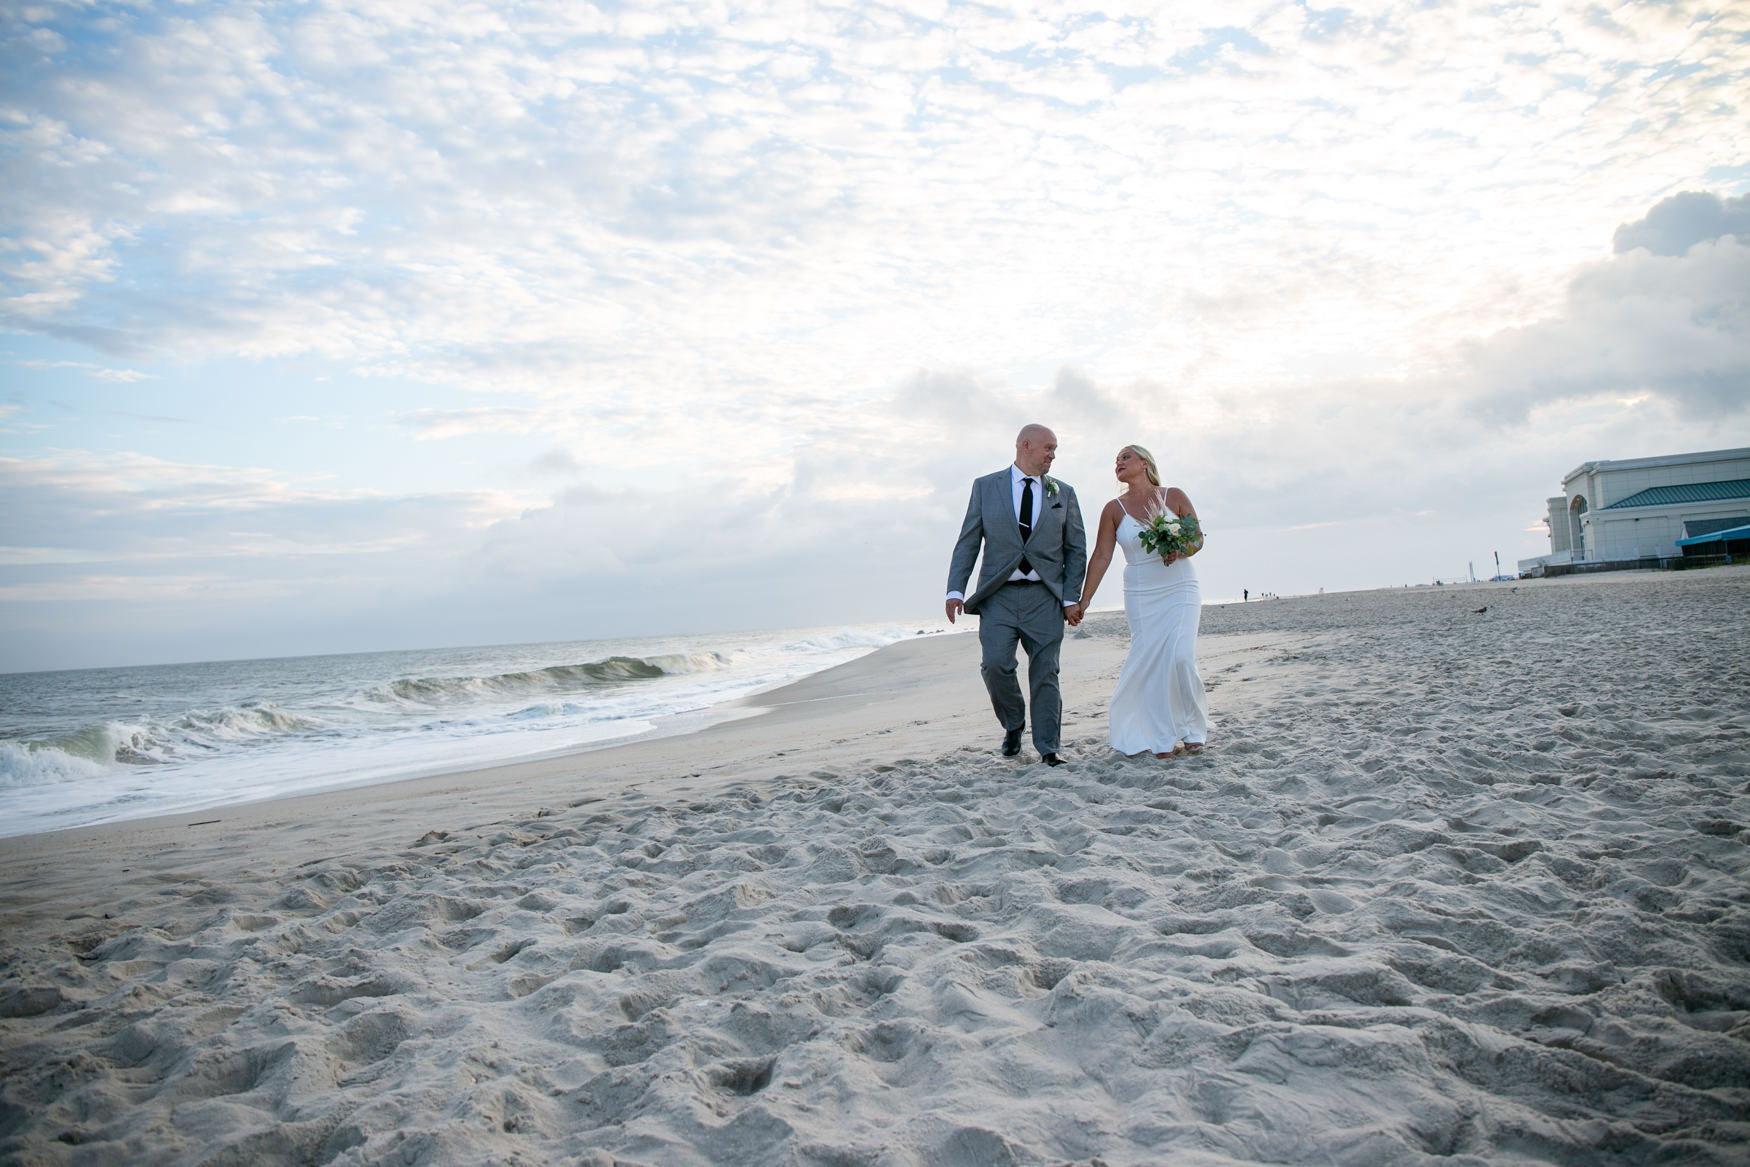 Cape May beach wedding